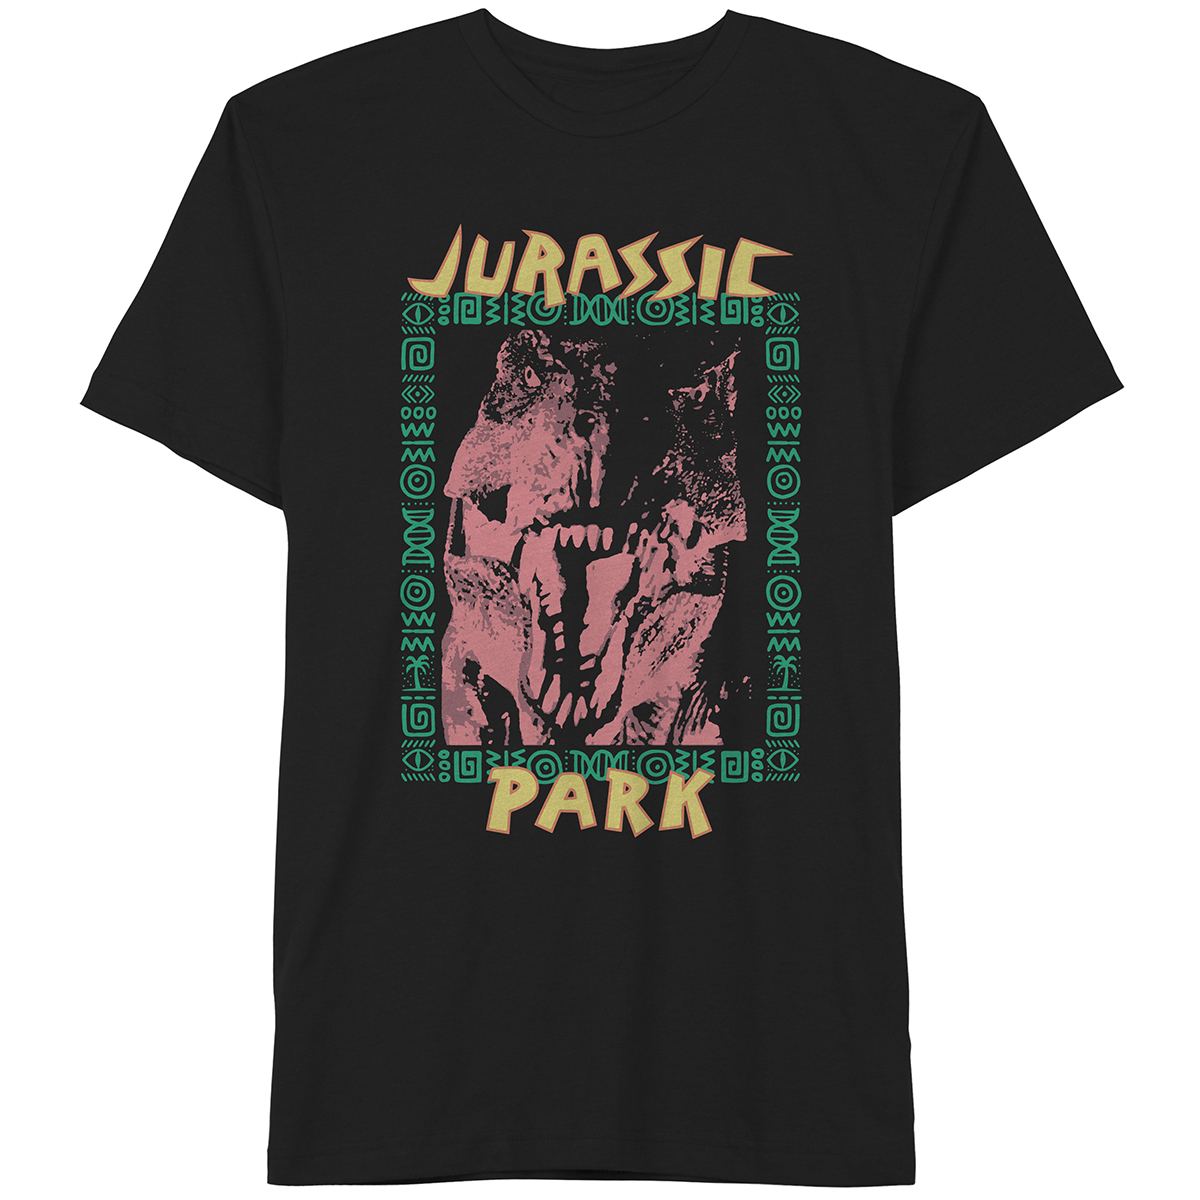 Jurassic Park Boys' Totem Short-Sleeve Tee